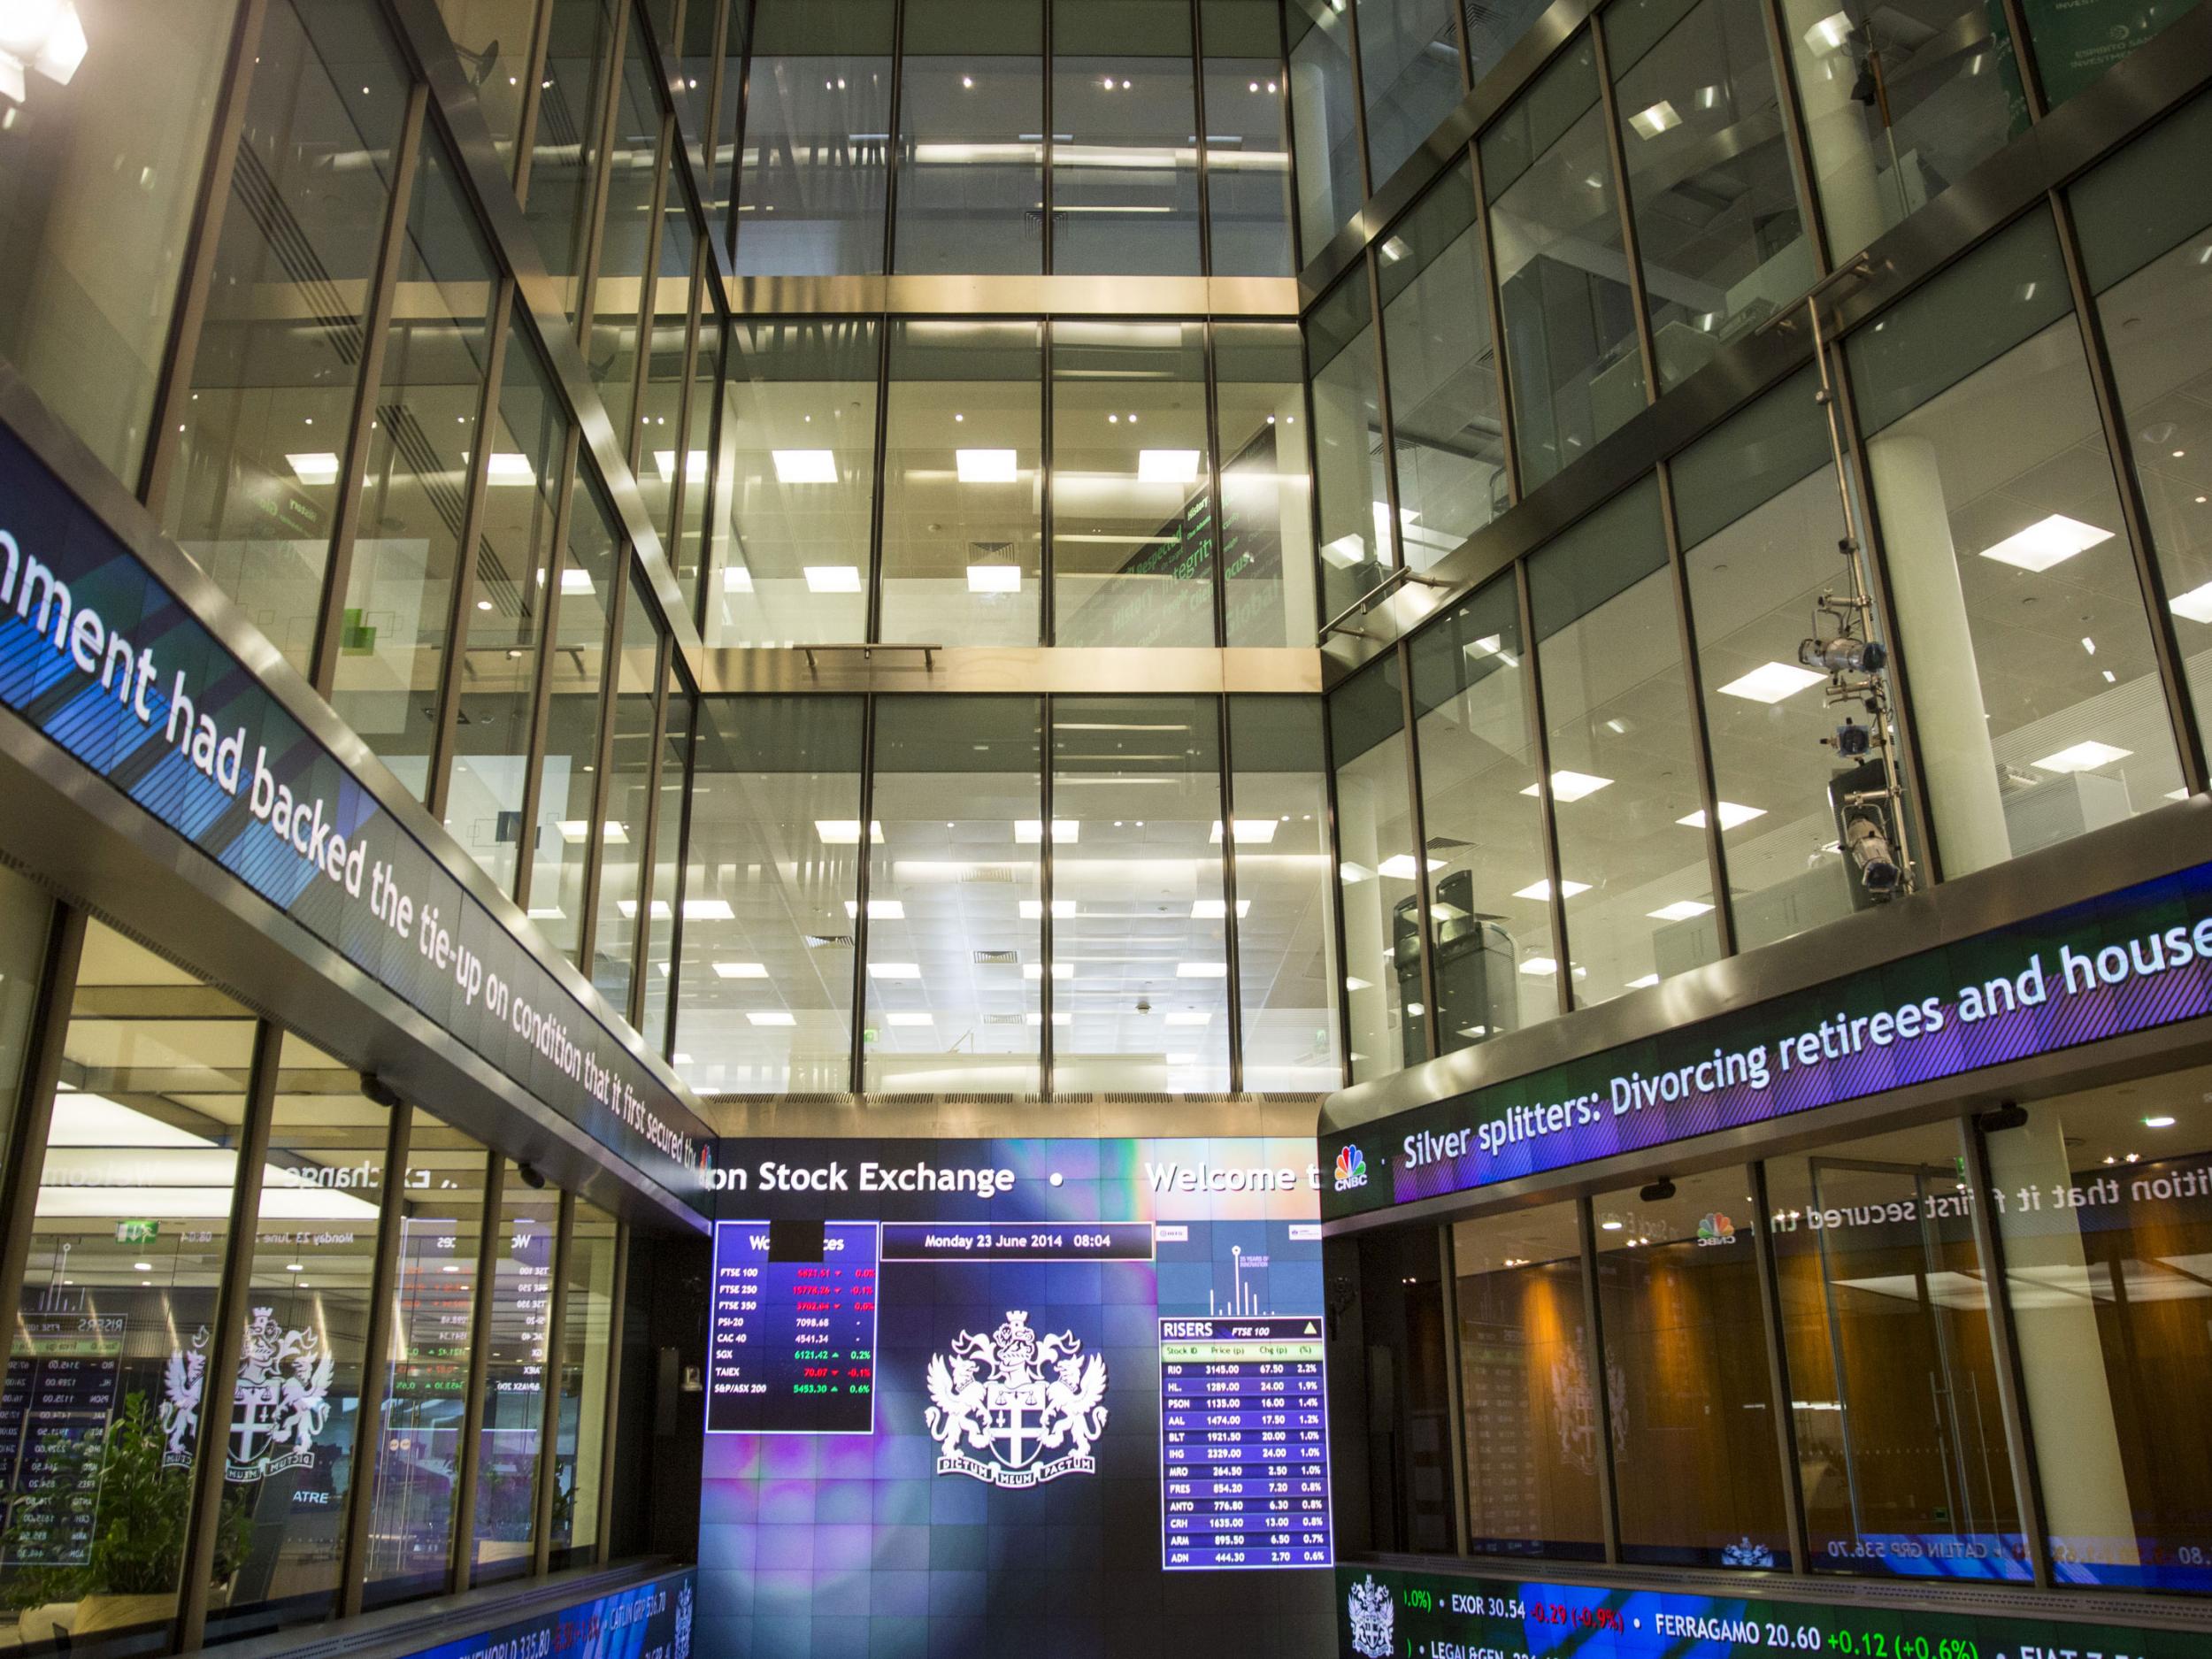 london stock exchange news explorer